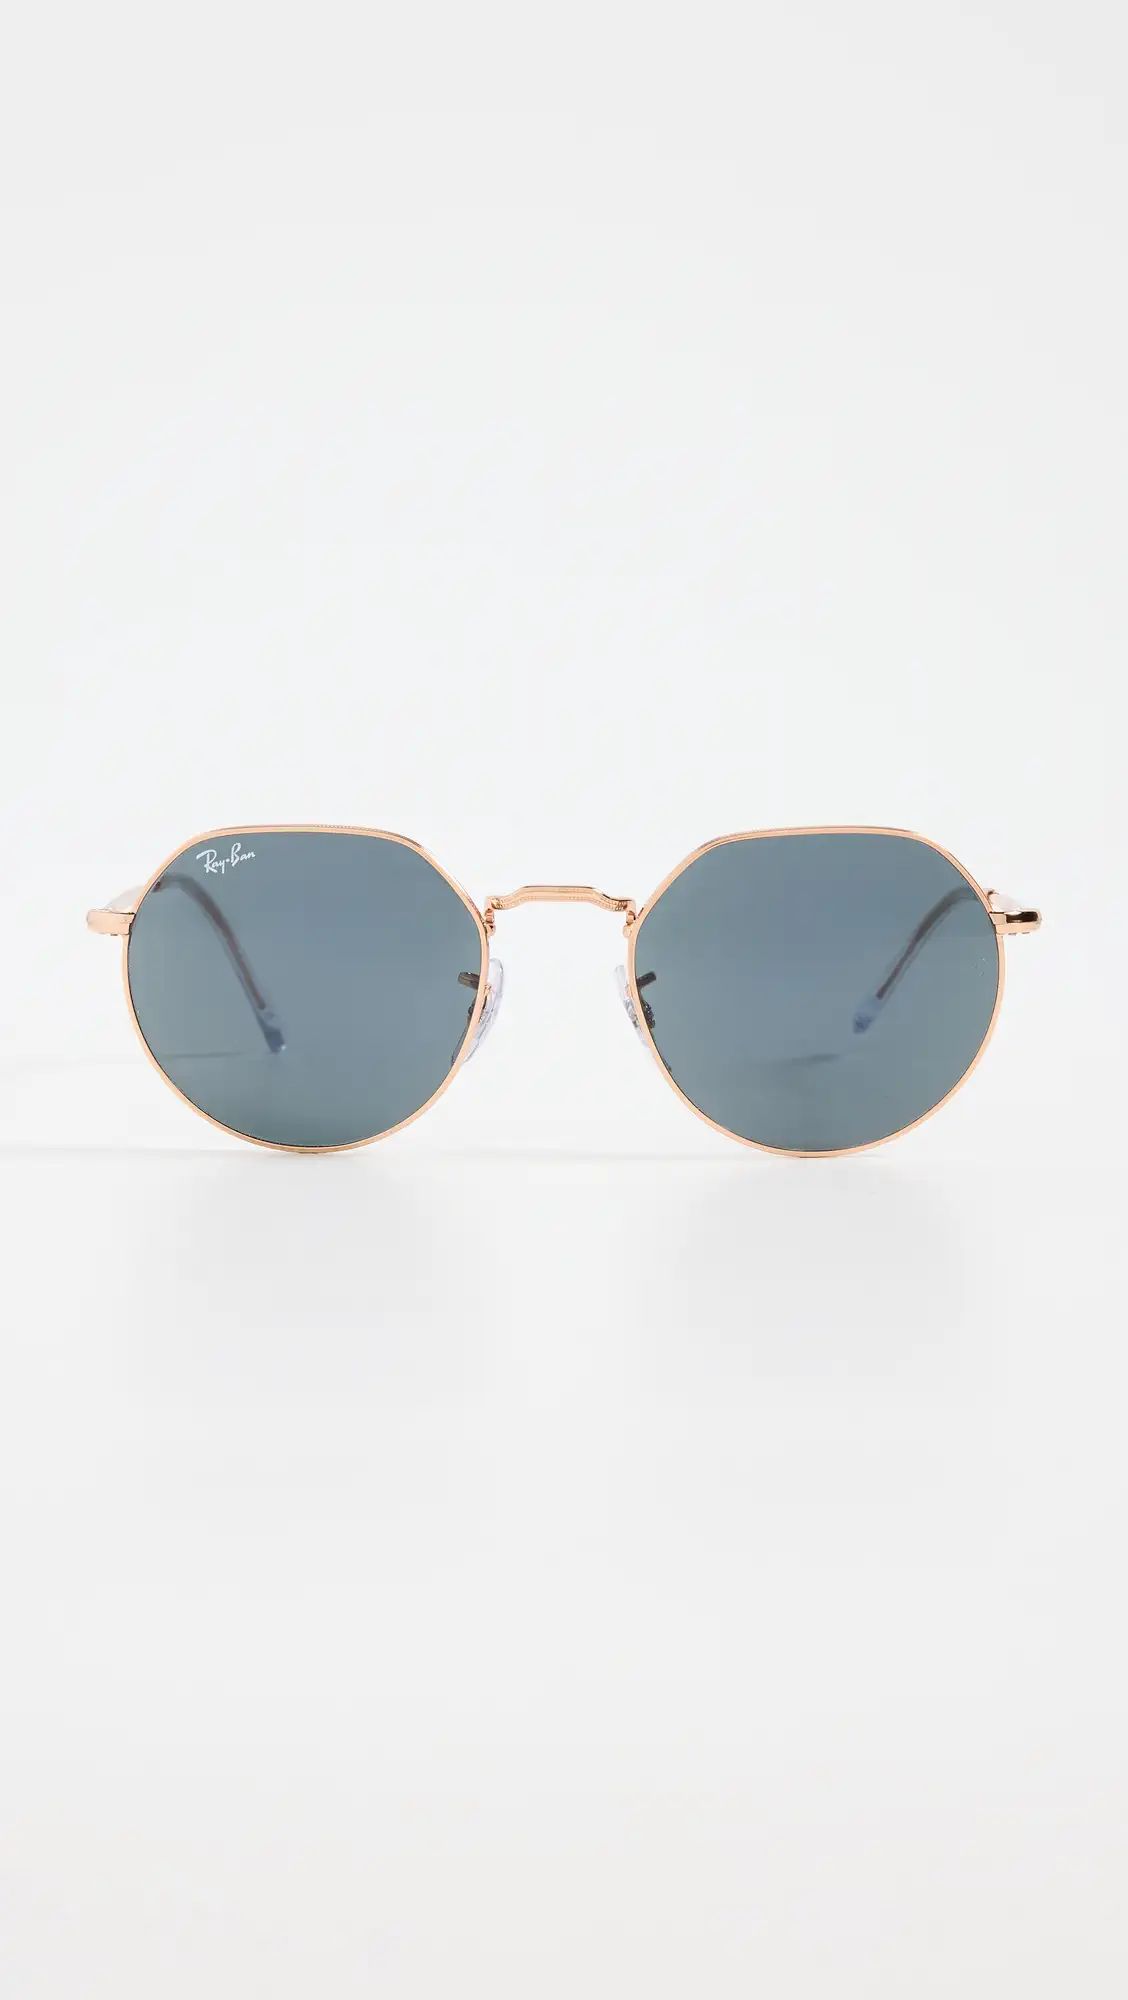 Jack Sunglasses | Shopbop